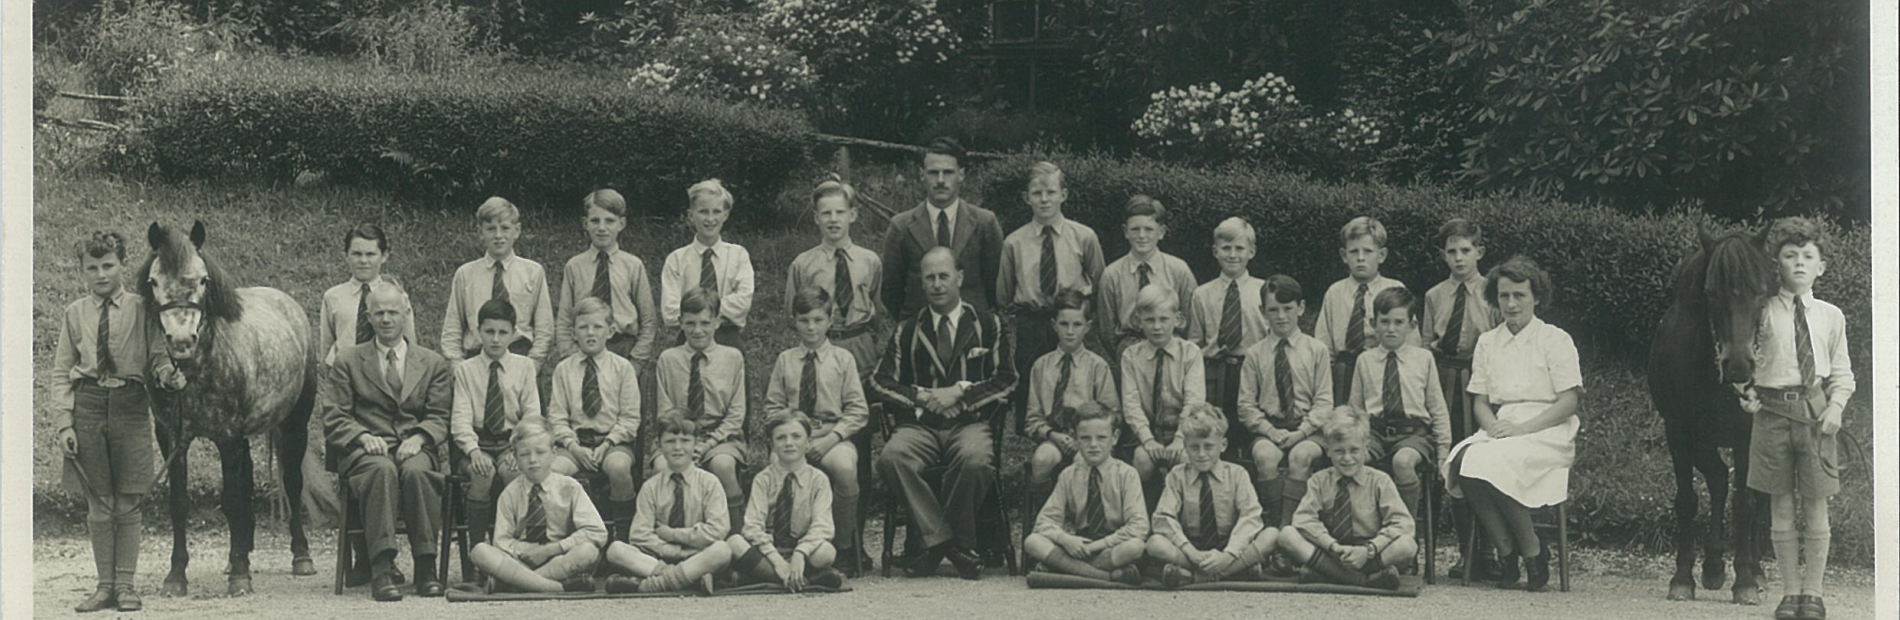 Kestrels school 1947